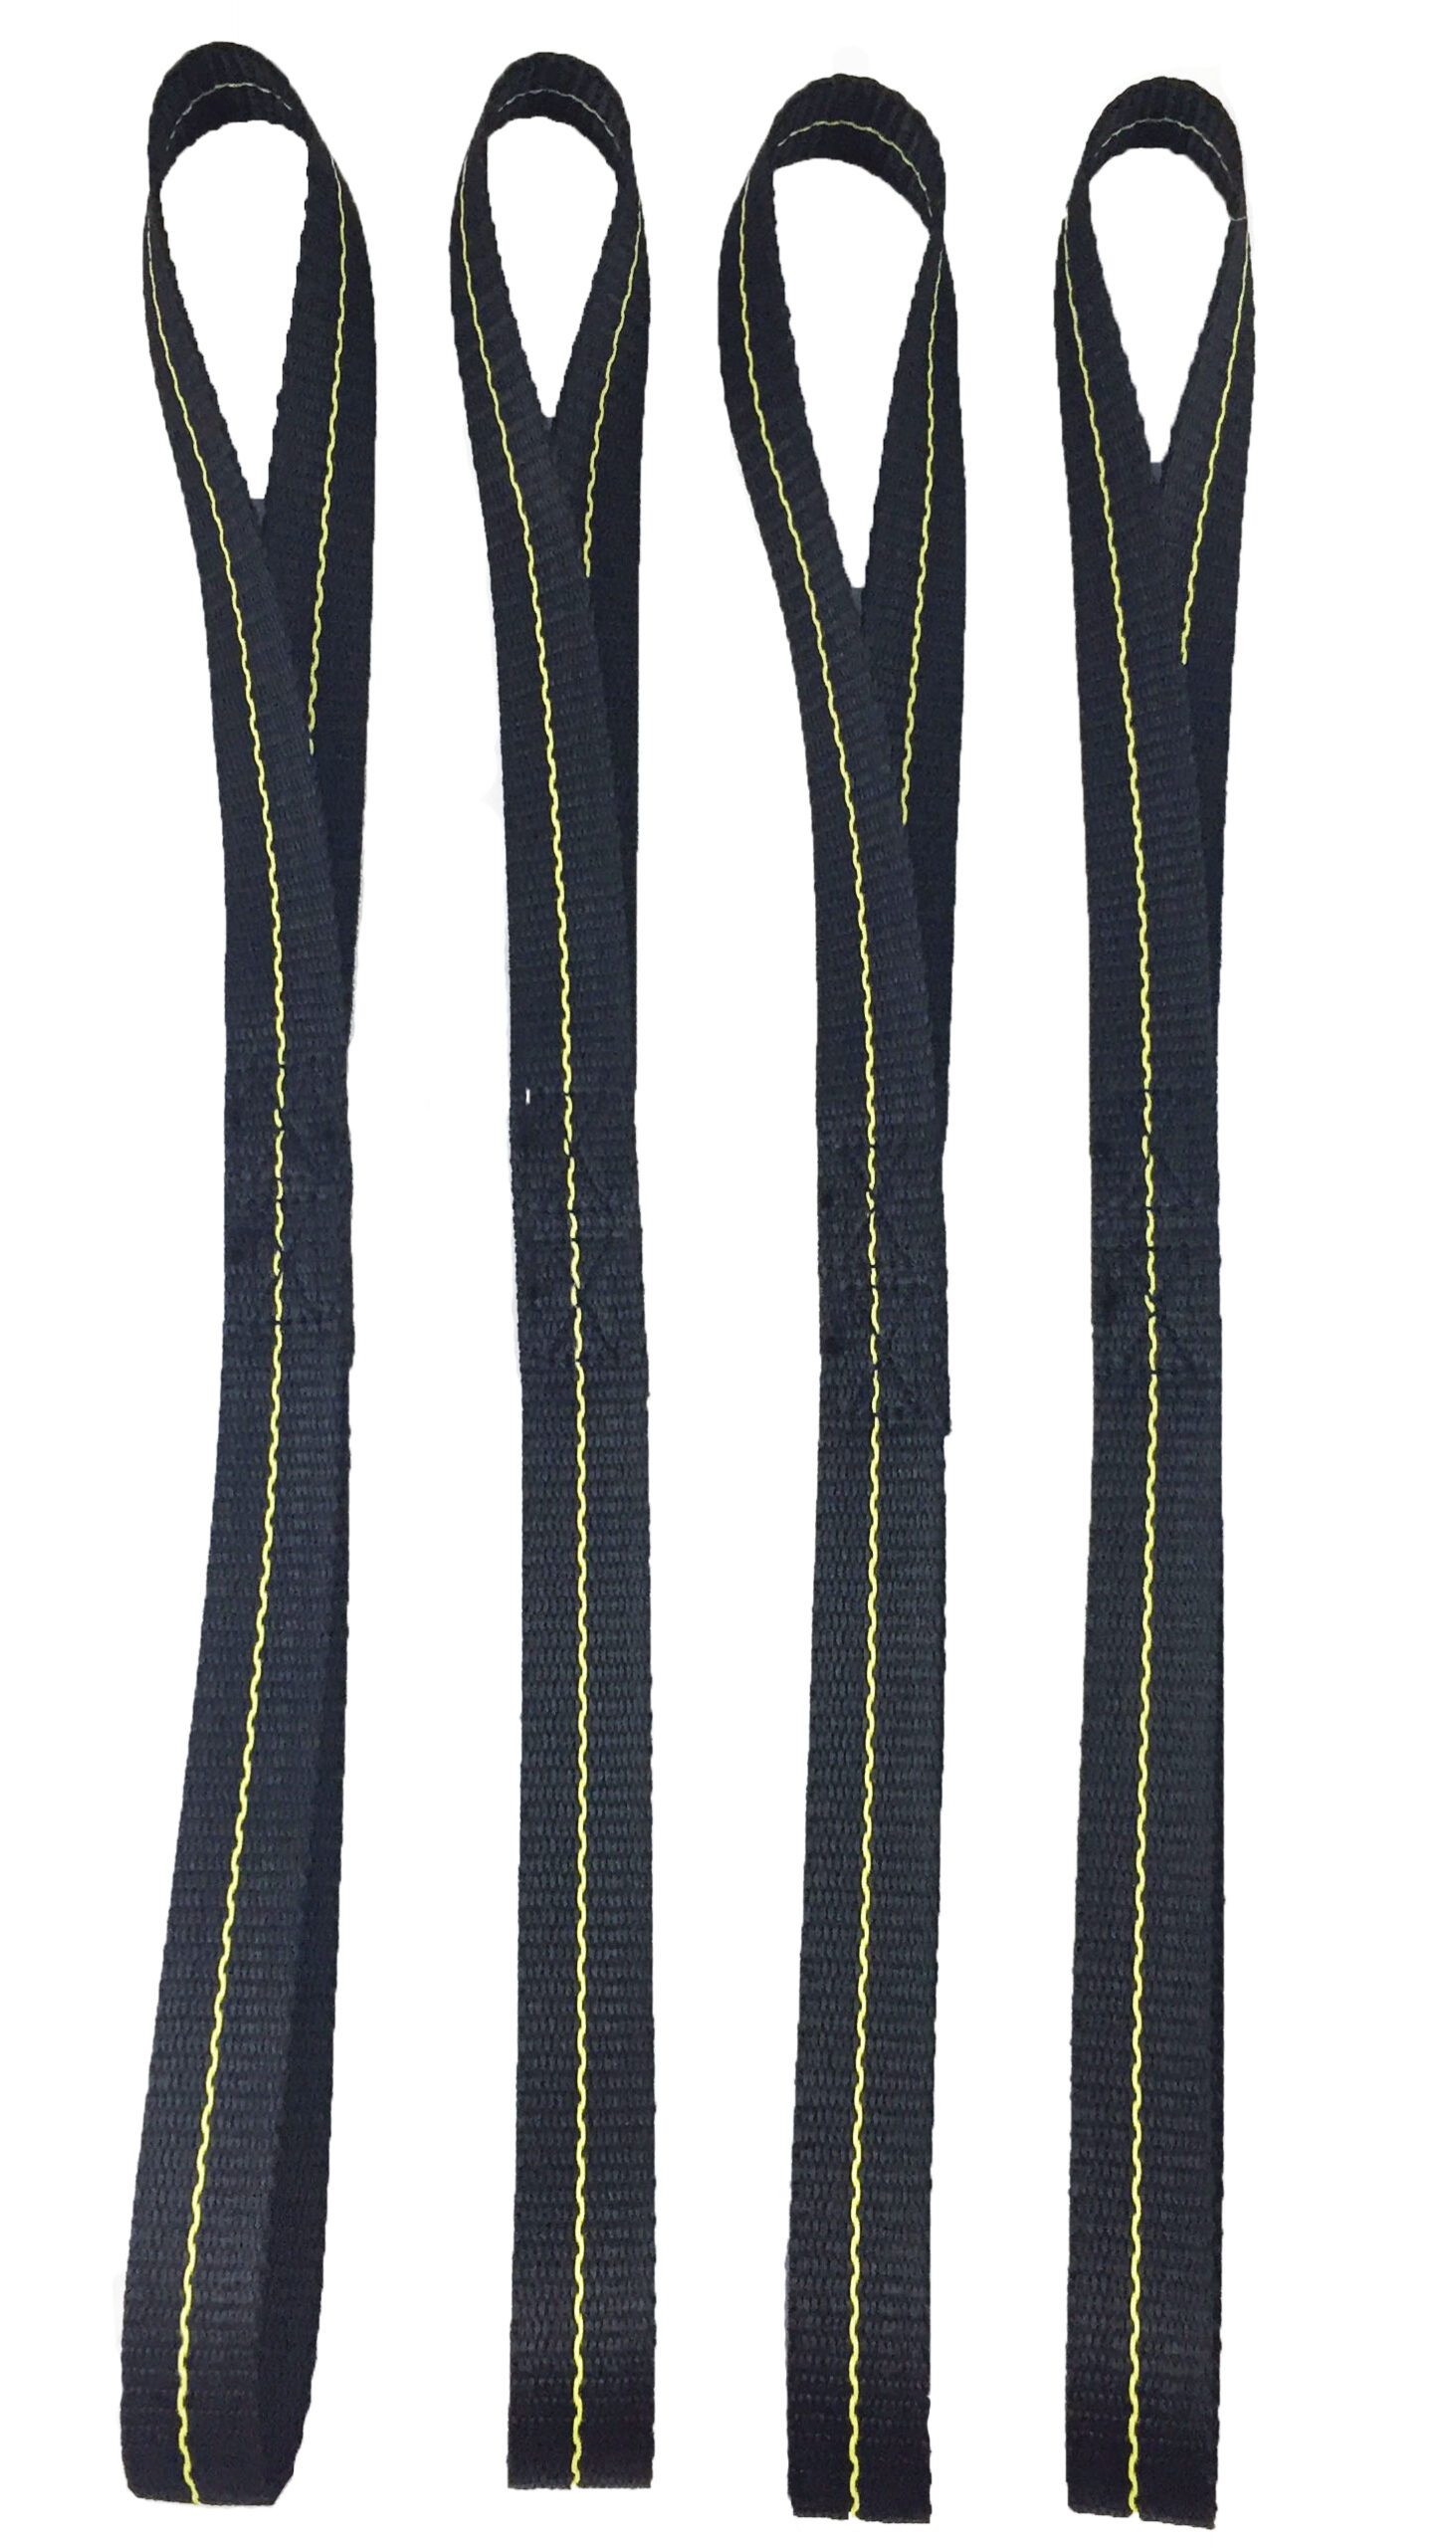 4 - 18" soft loop straps